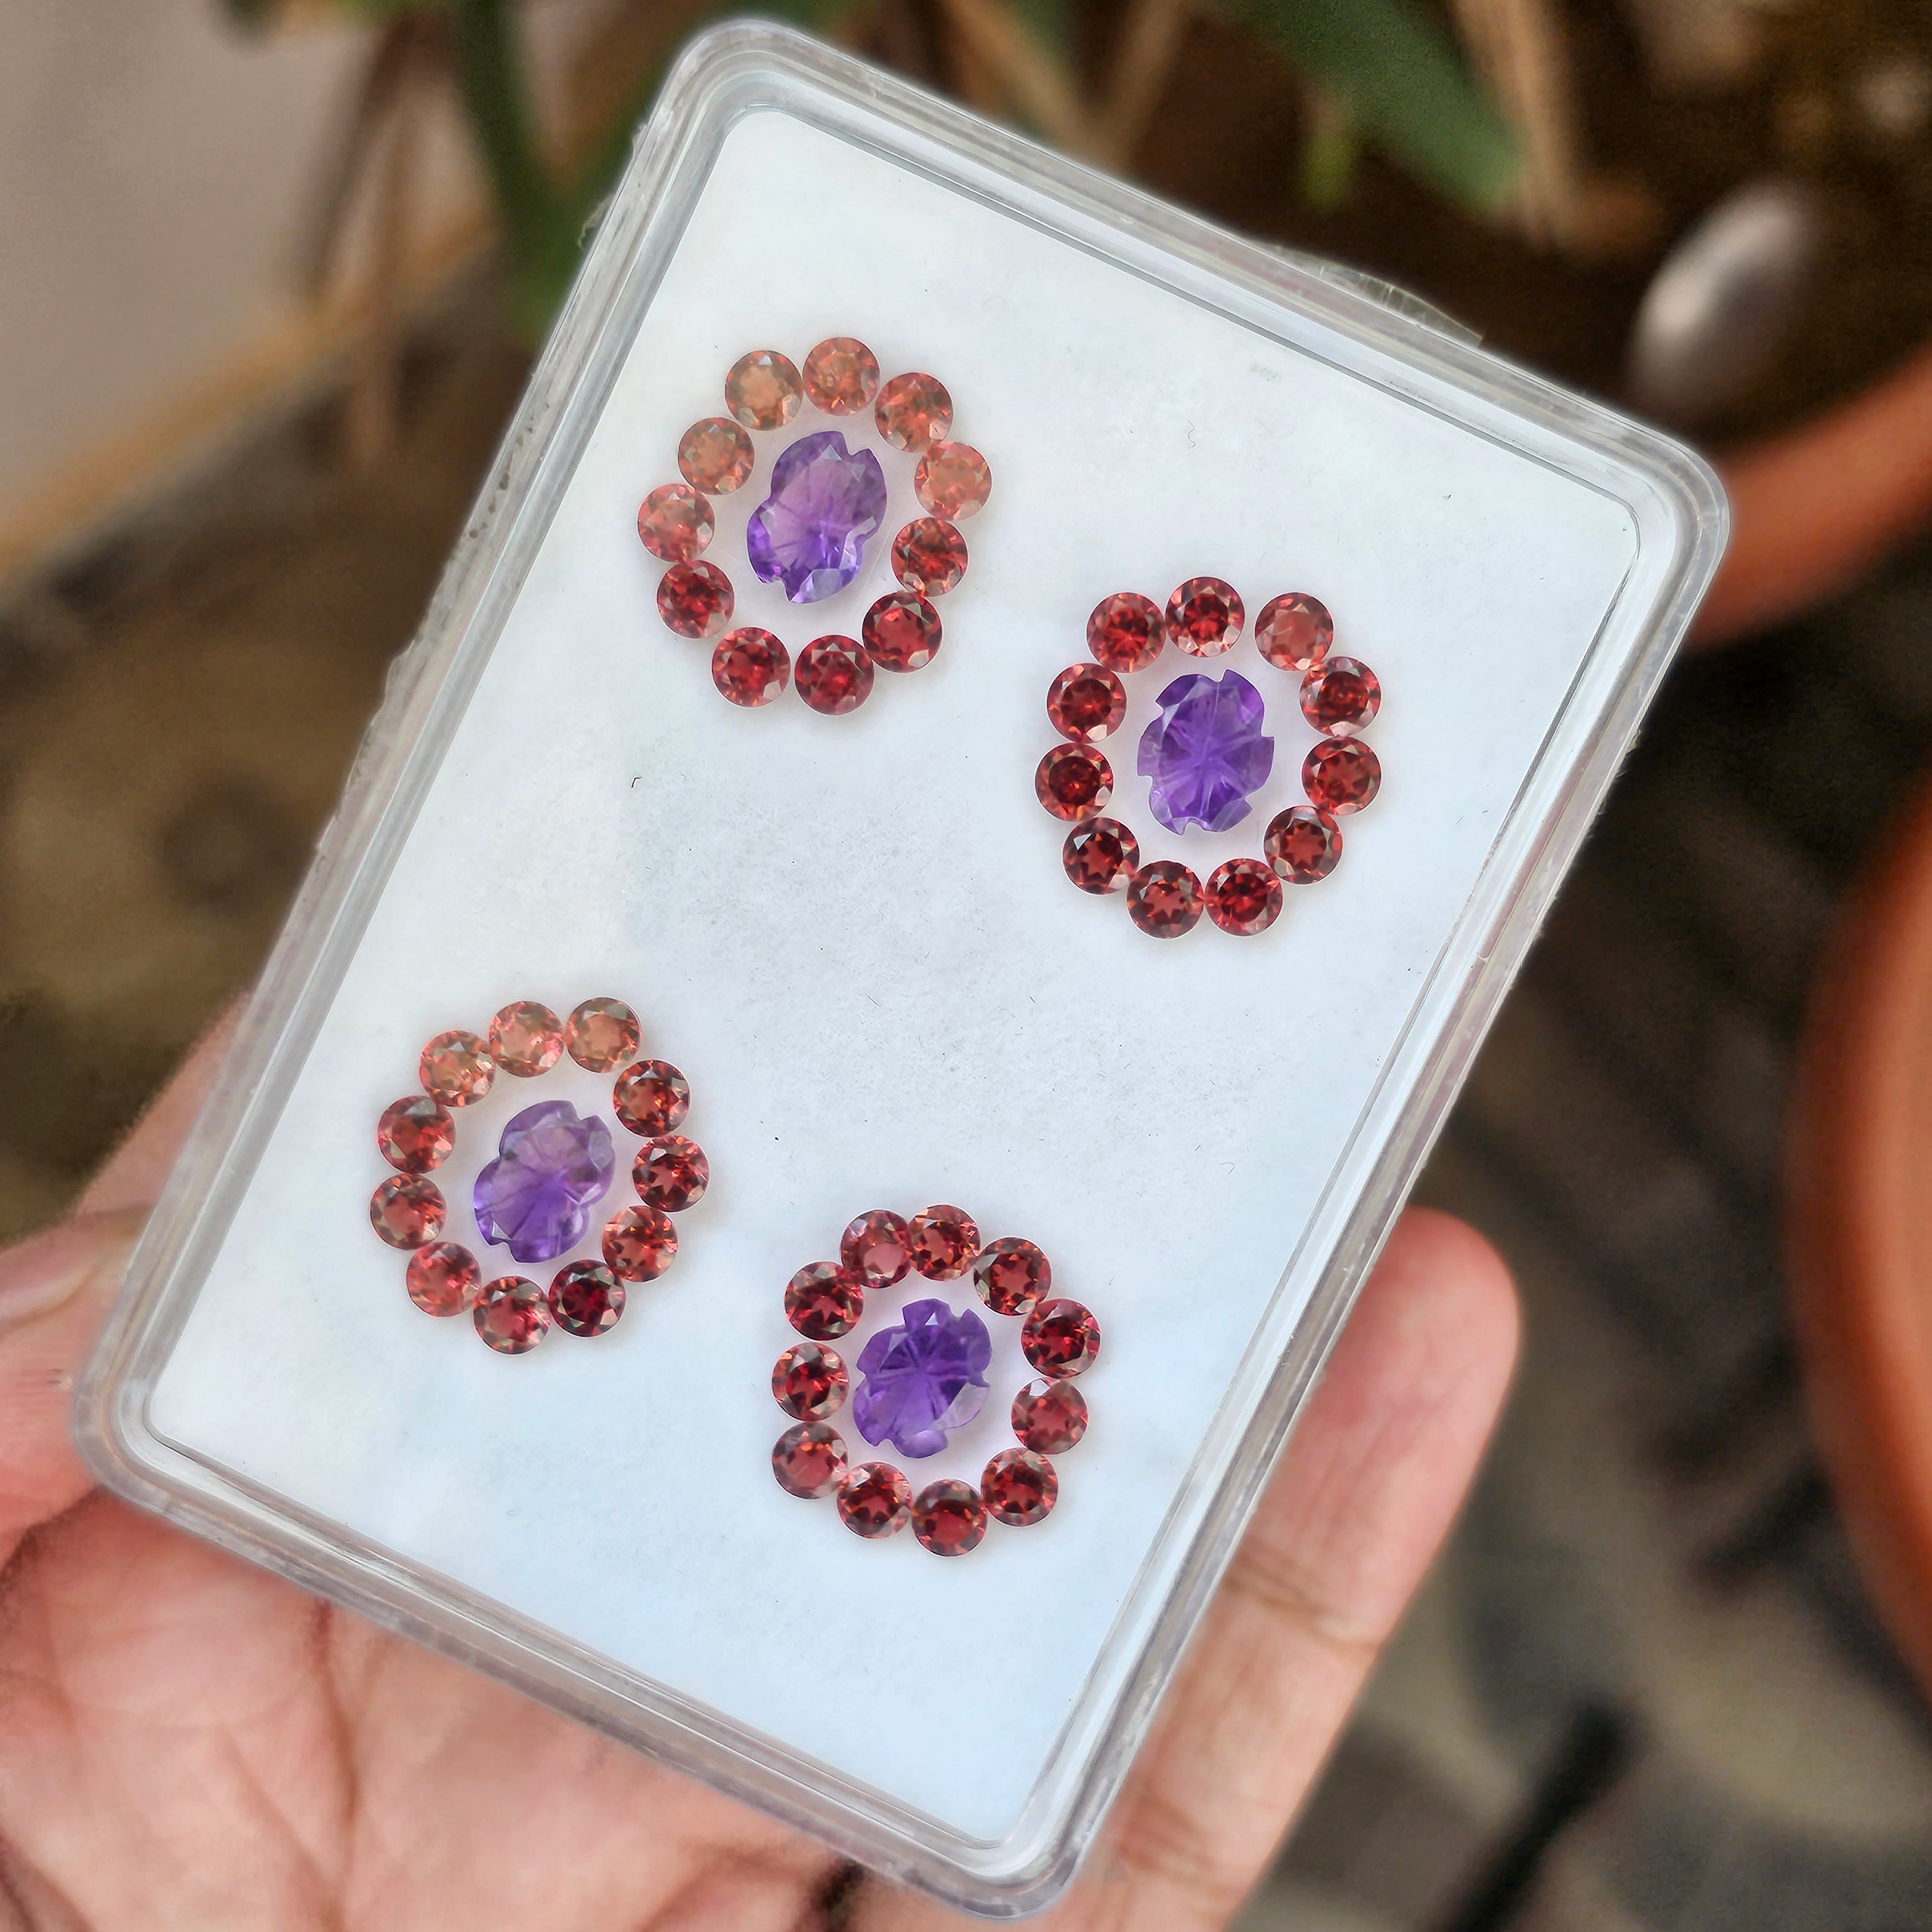 48 Pcs Natural Amethyst And Garnet Flower Carved Gemstone Shape: Round & Oval| Size: 4-9mm - The LabradoriteKing